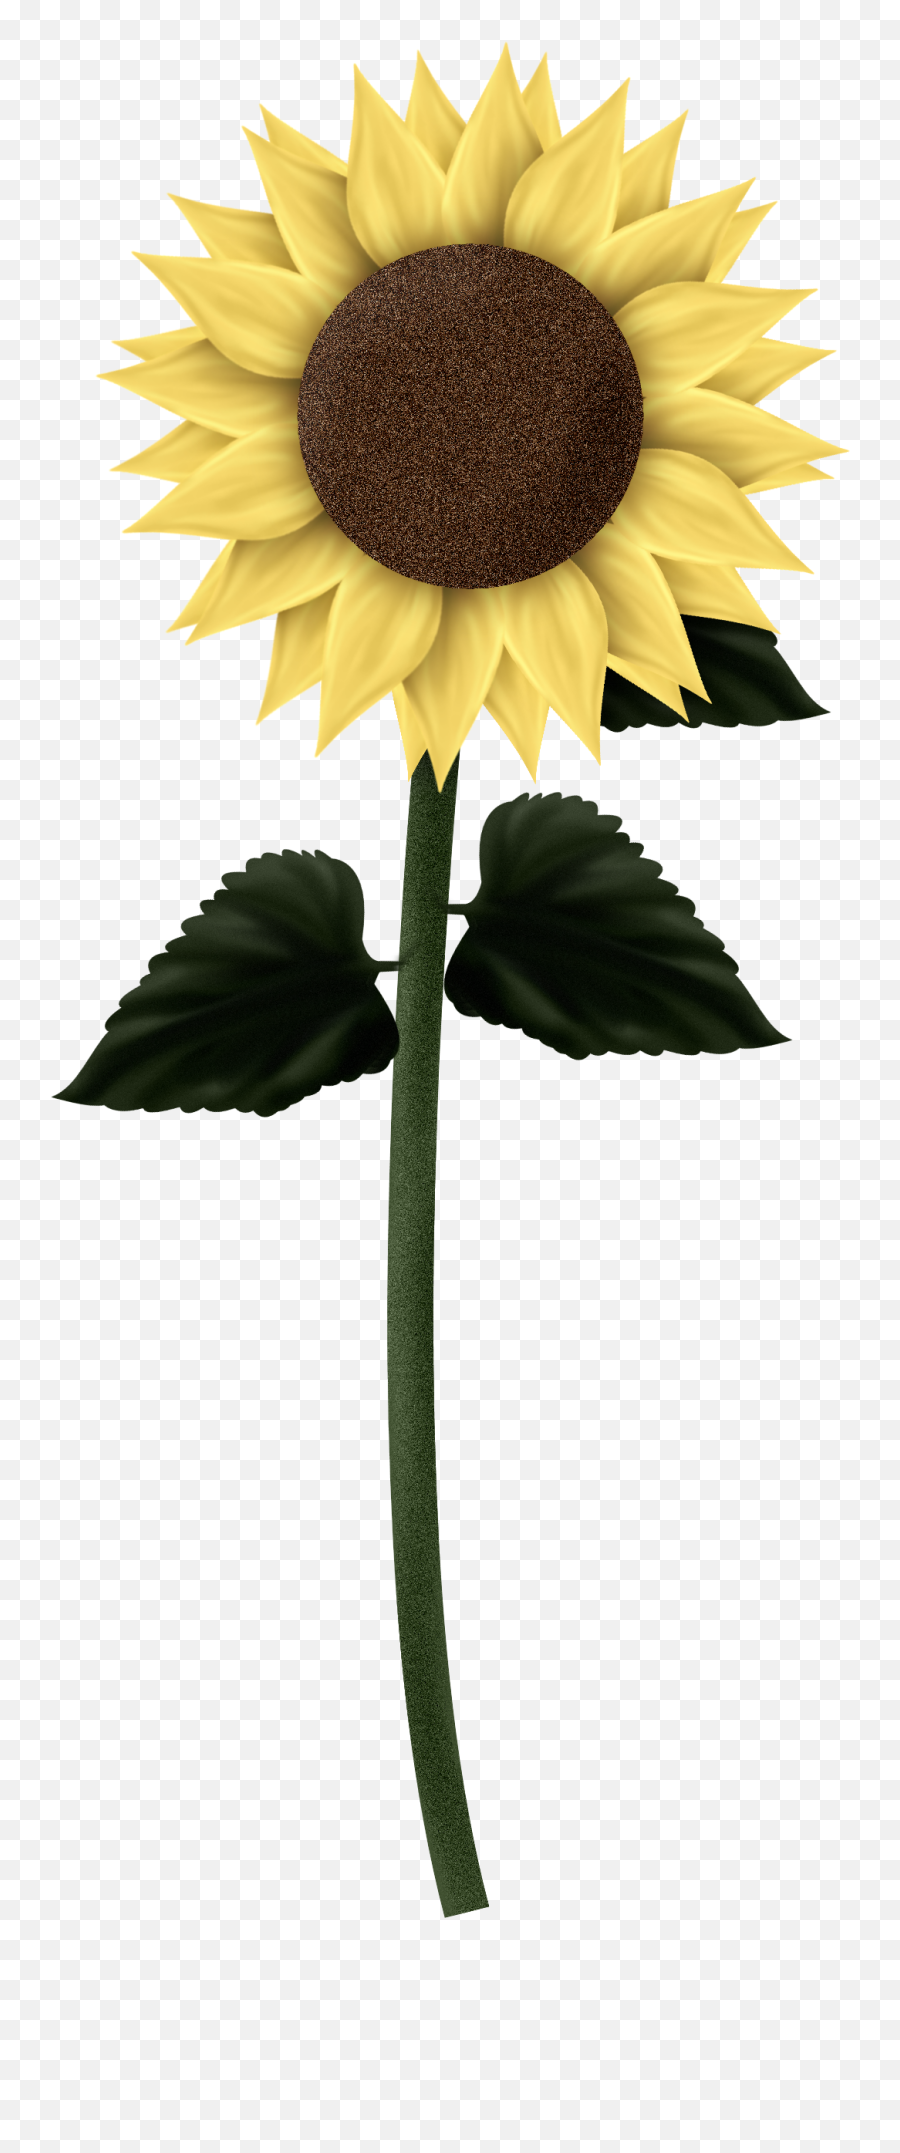 Sunflower Gif Transparent Background - Sunflower With Stem Transparent Background Emoji,Sunflower Clipart